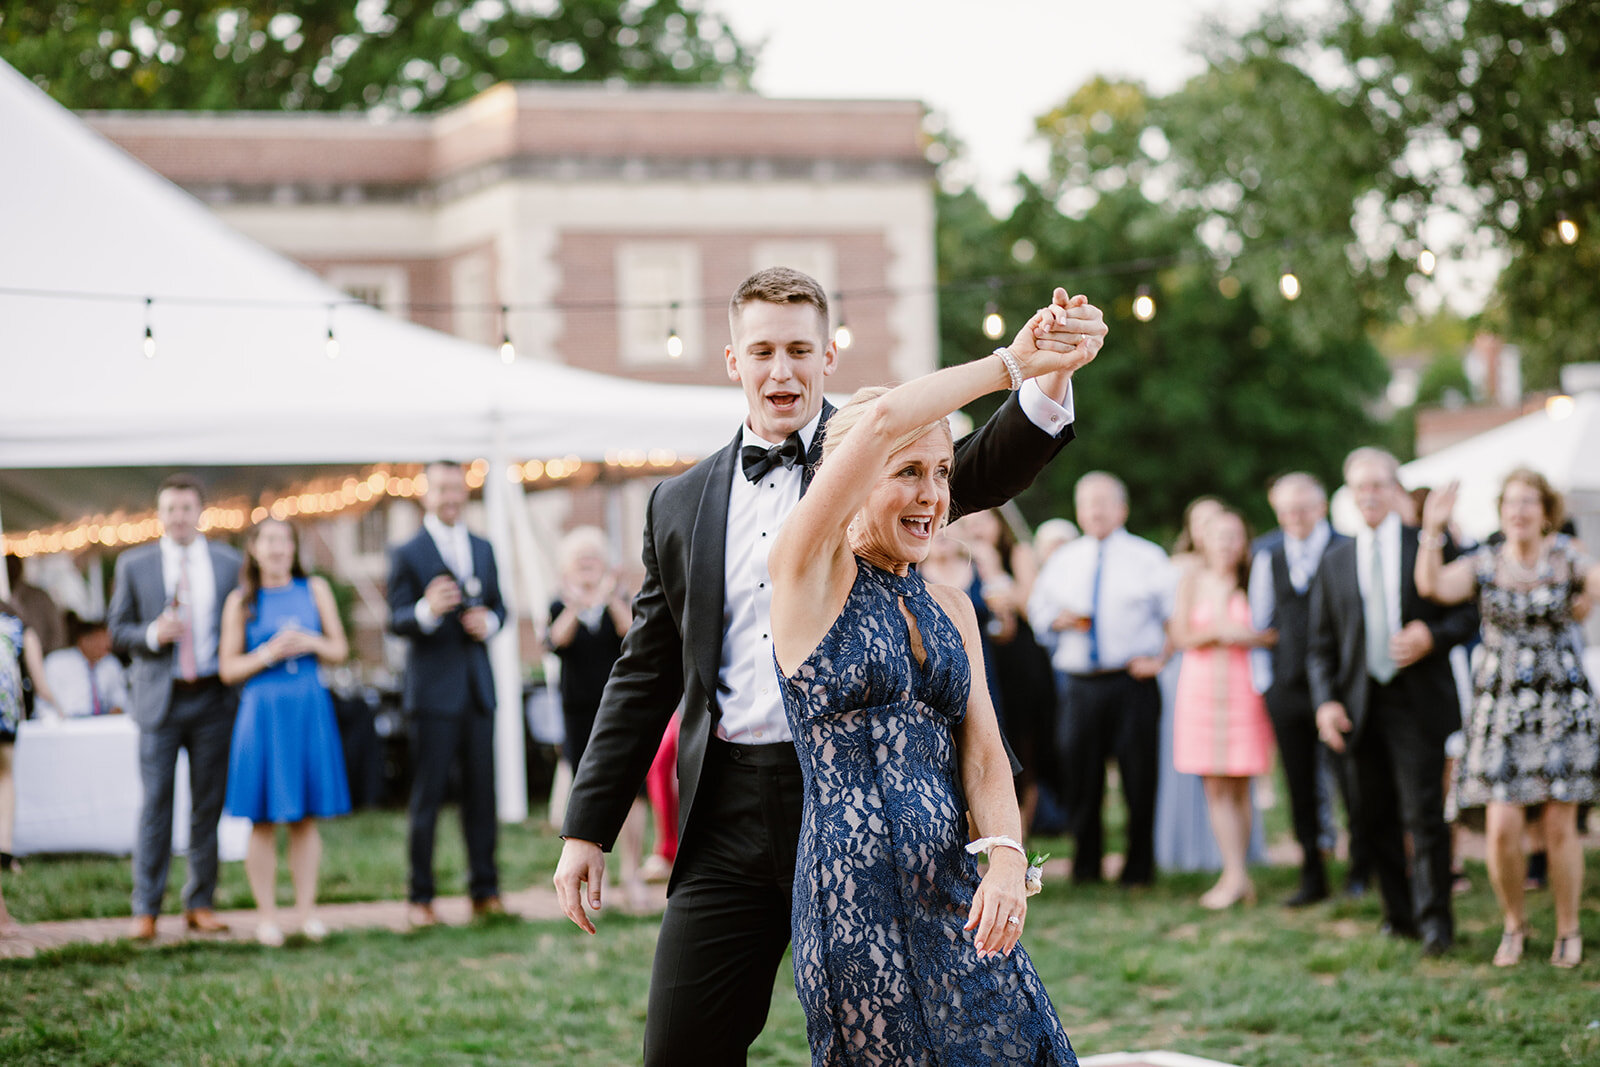  Groom and Mother Dancing | Sarah Mattozzi Photography | Ball Gown Wedding dress and Black Tux | Outdoor Classic Wedding at Third Church and Veritas School | Richmond Wedding Photographer 